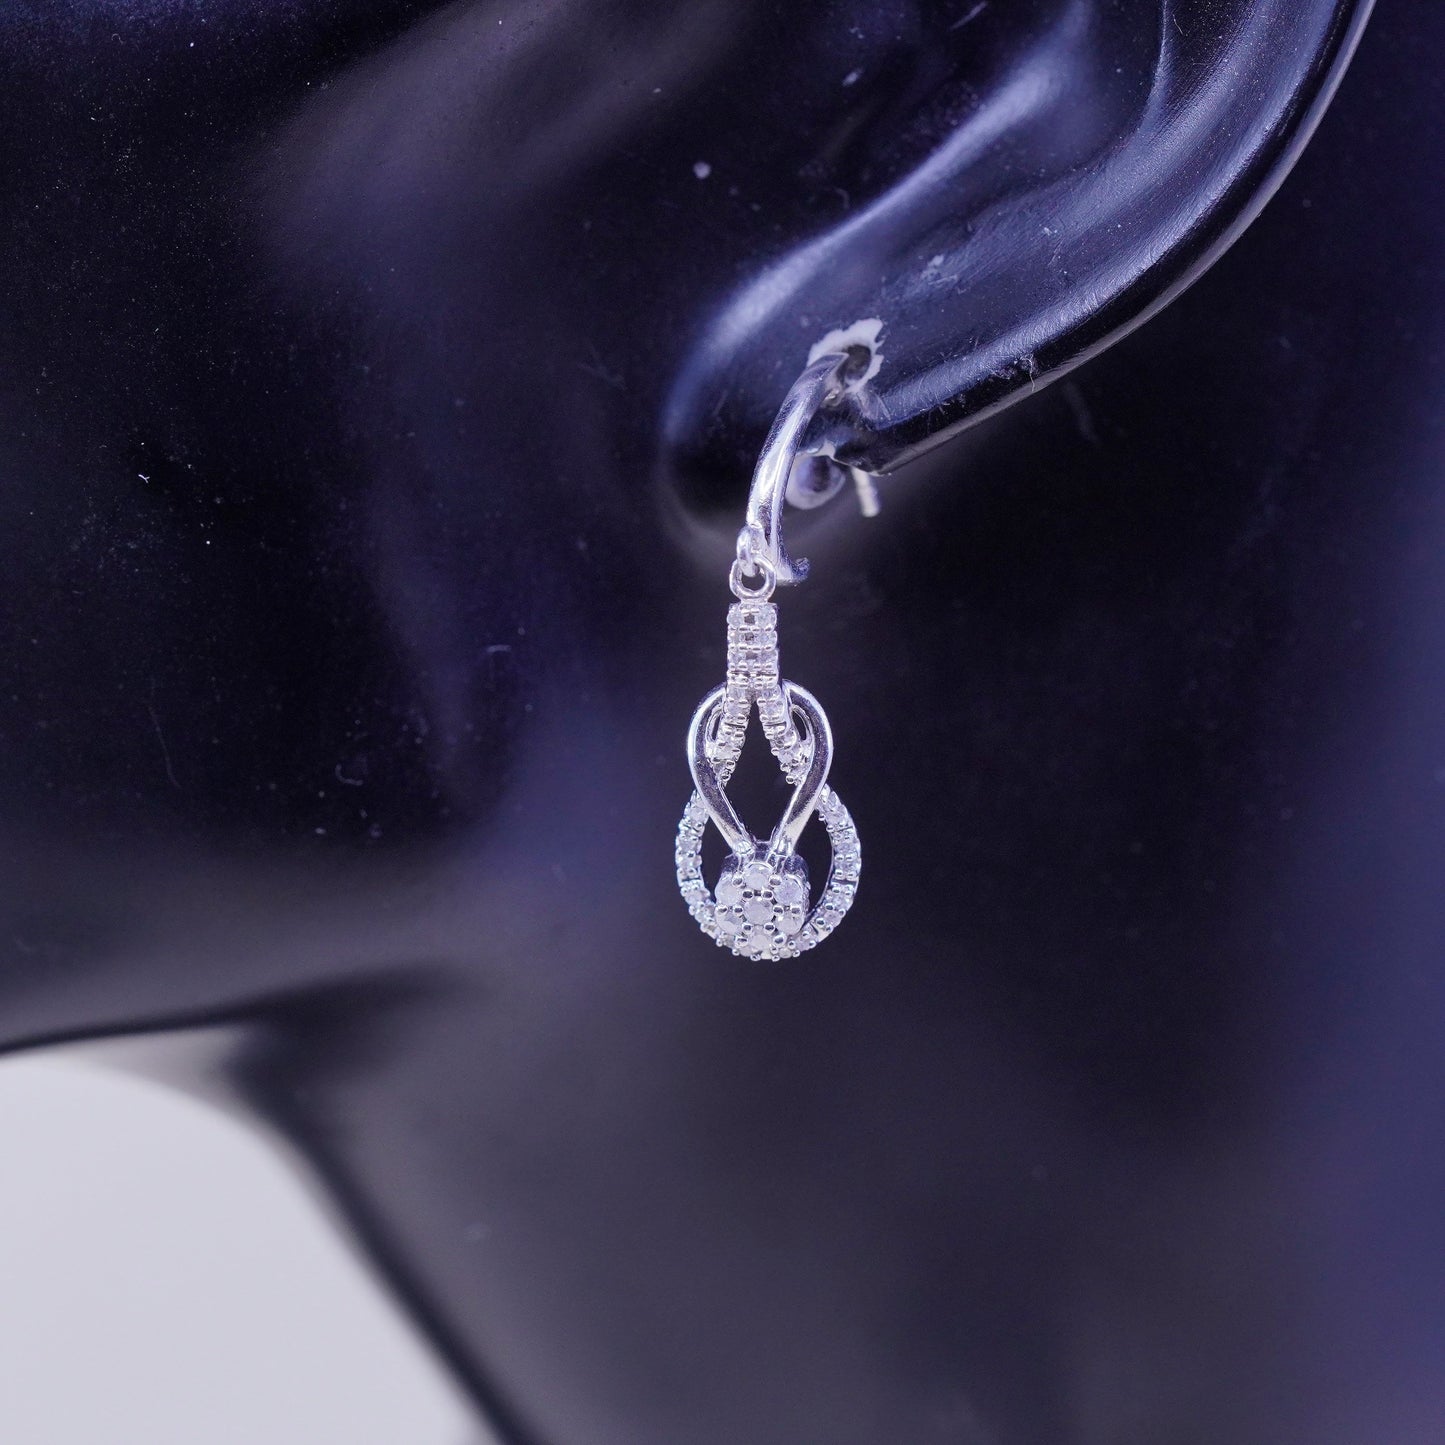 Vintage sterling 925 silver entwined teardrop earrings with genuine diamond